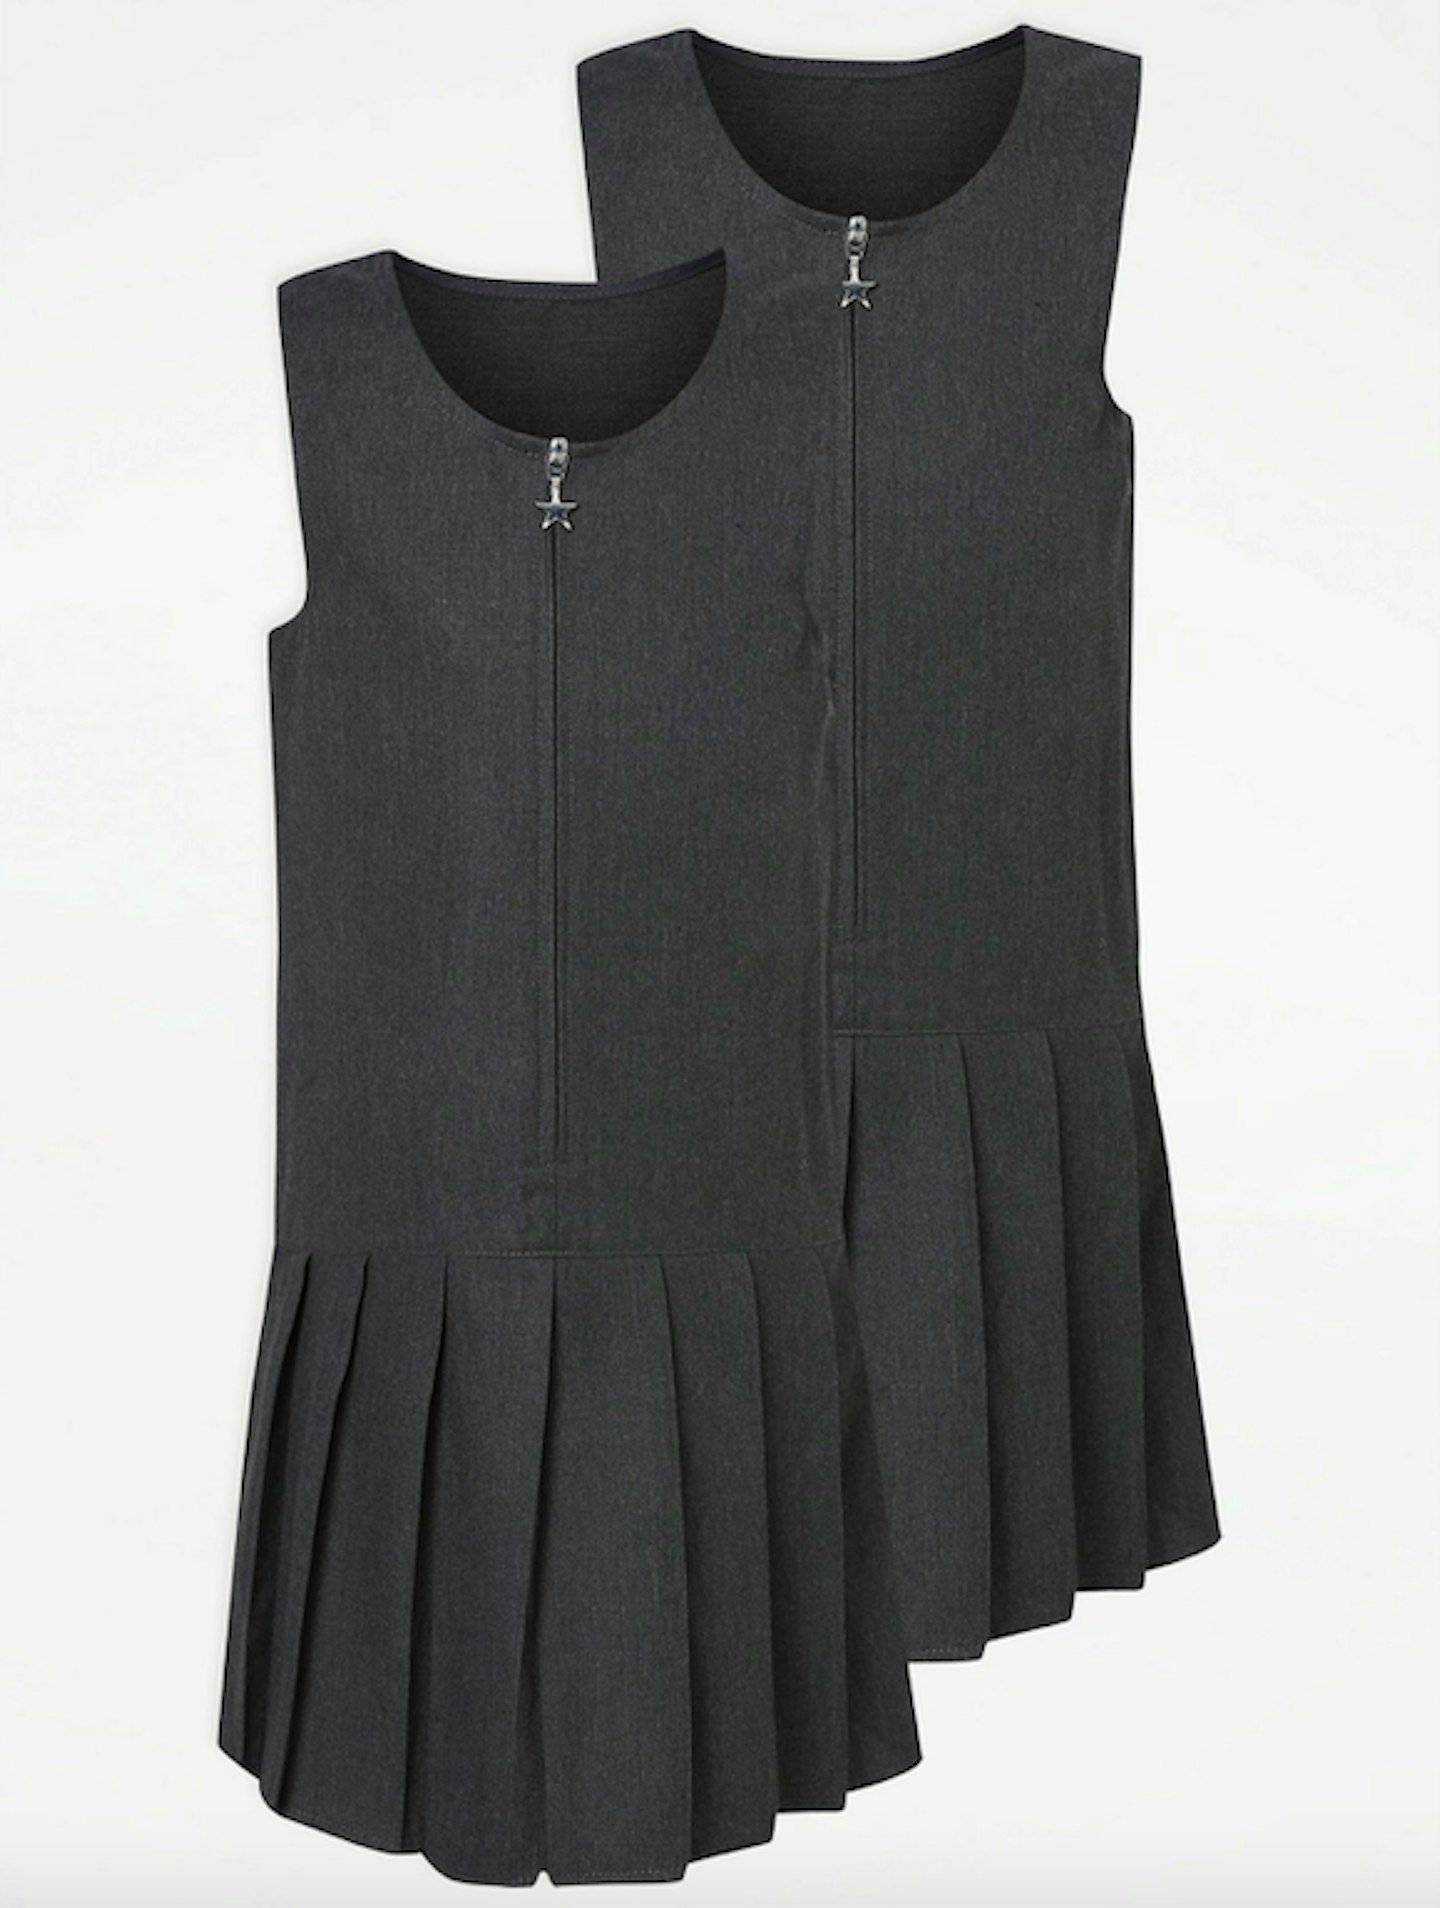 Grey Drop Waist Pleat School Pinafore Dress 2 Pack, £9